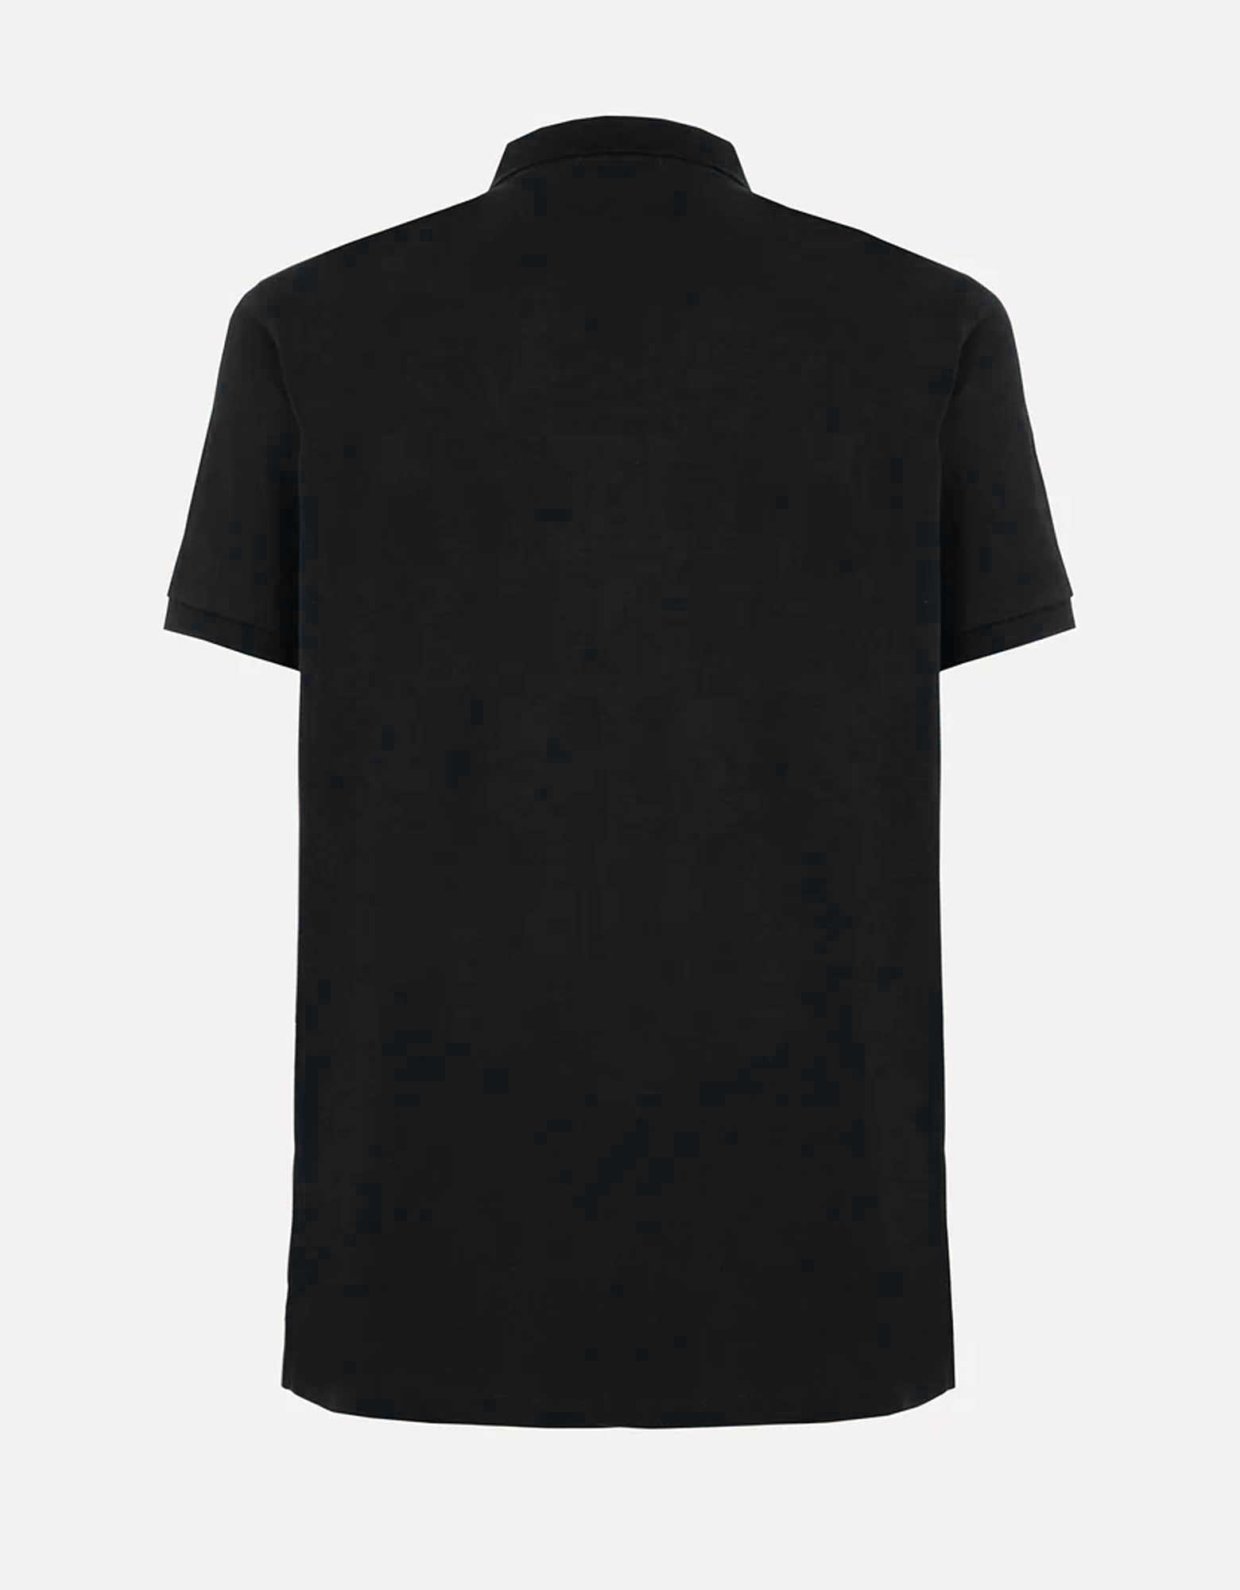 U.S Polo ASSN Polo enlarged t-shirt black